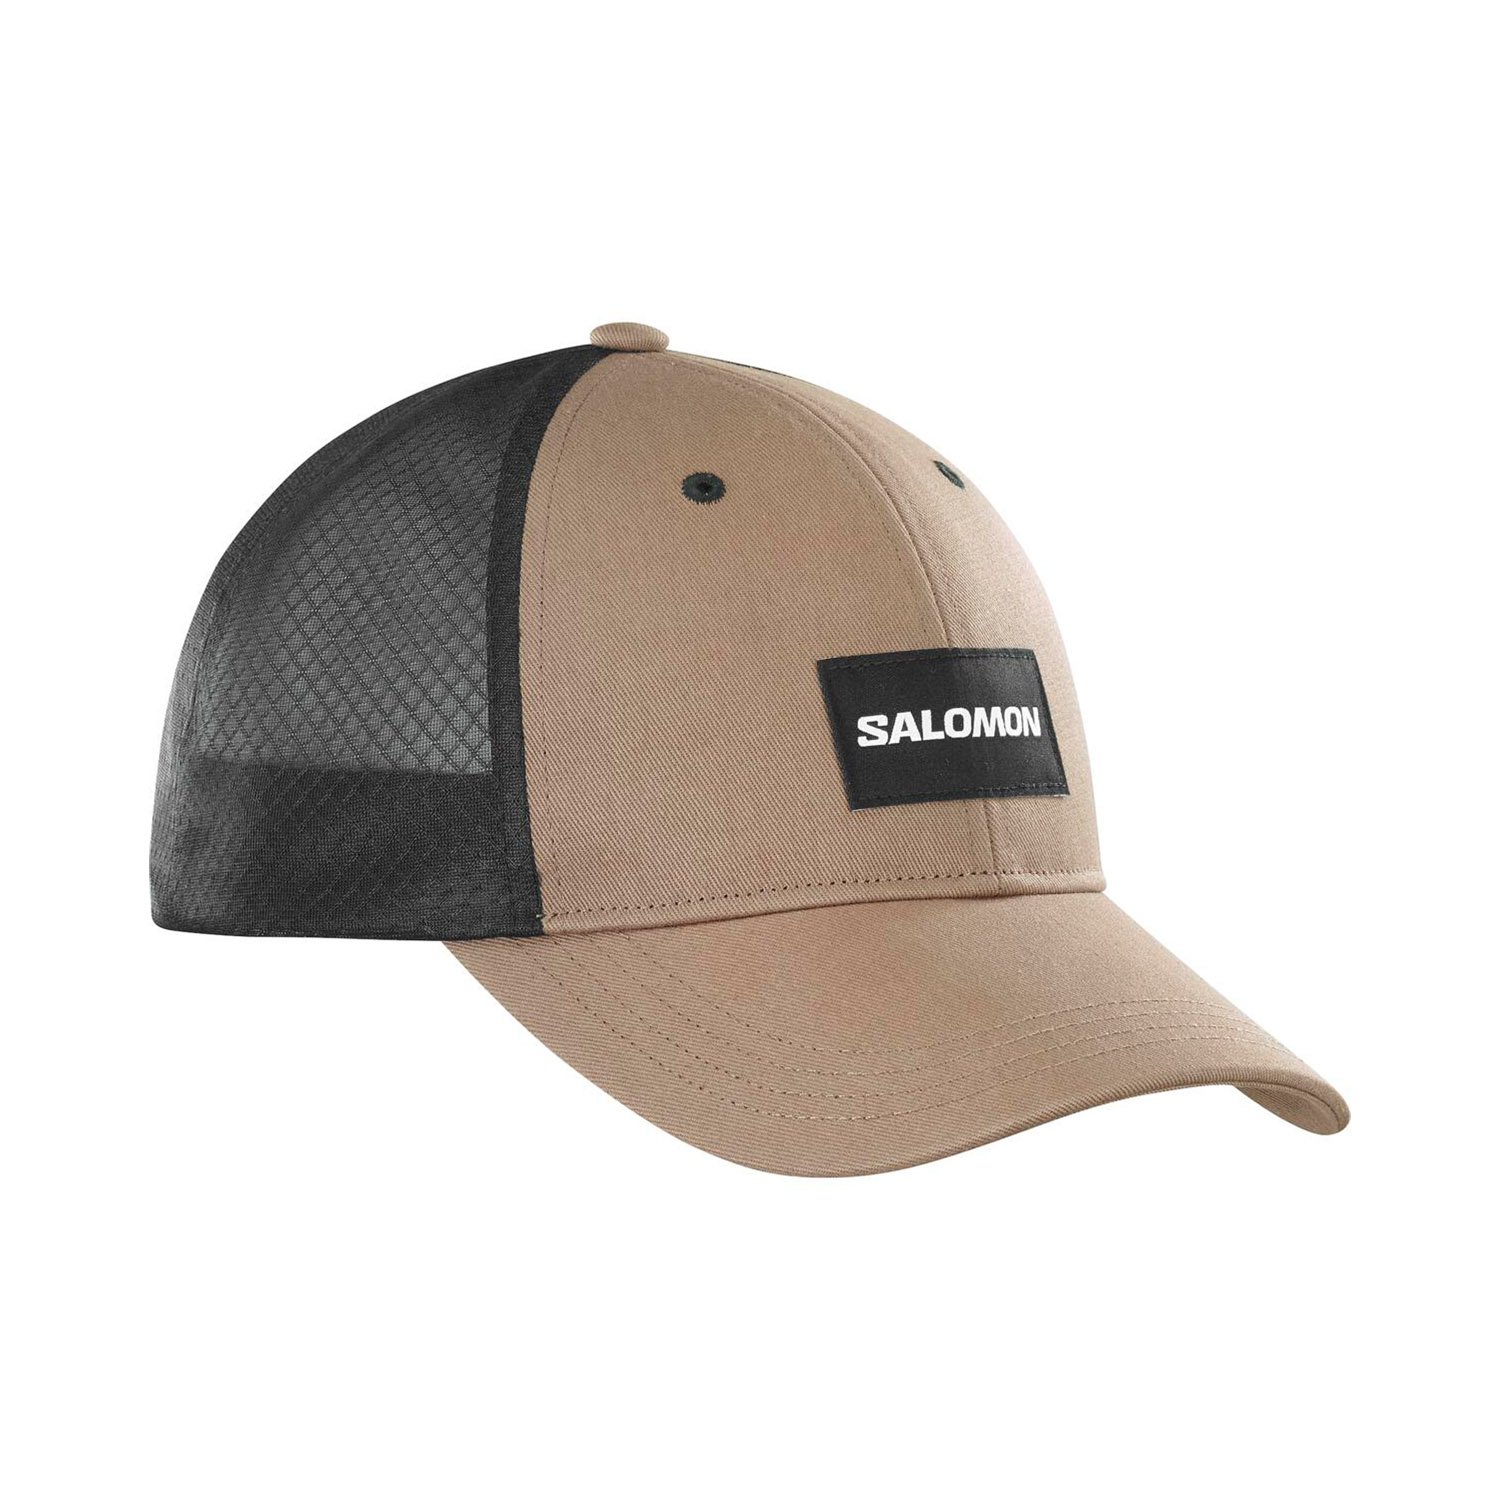 Salomon Trucker Curved Şapka - Bej - 1